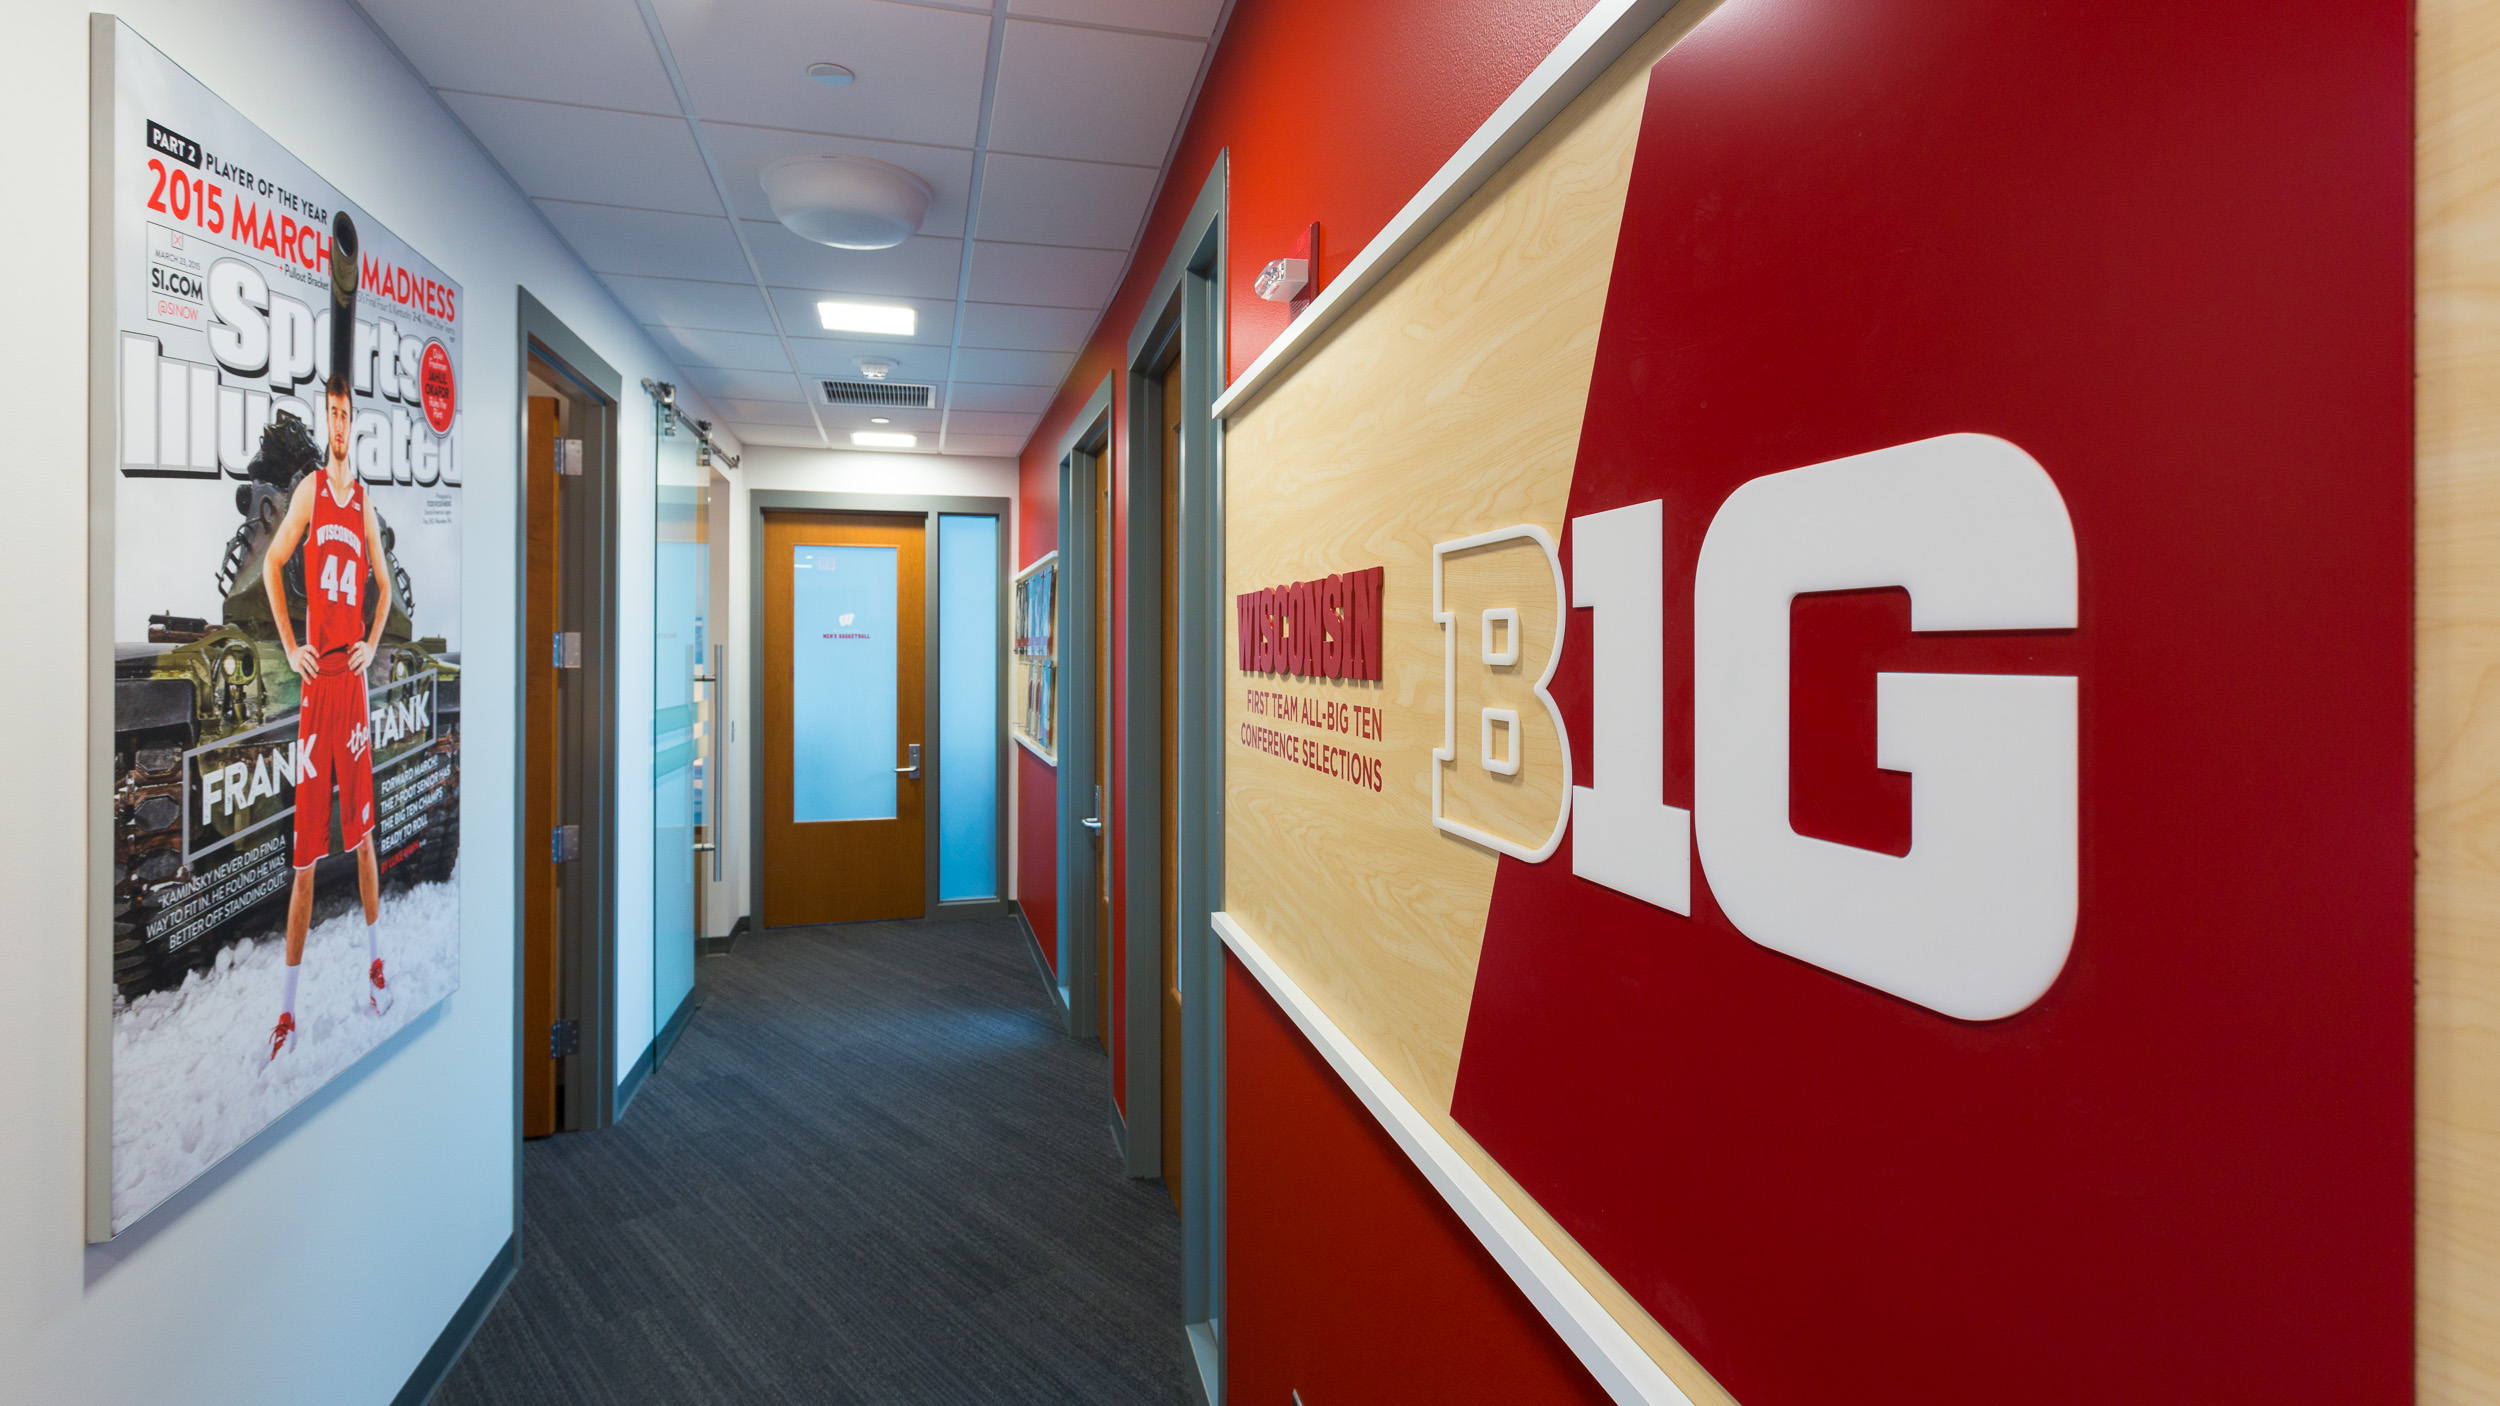 University of Wisconsin - Basketball Offices Big Ten Acrylic SEG Frame